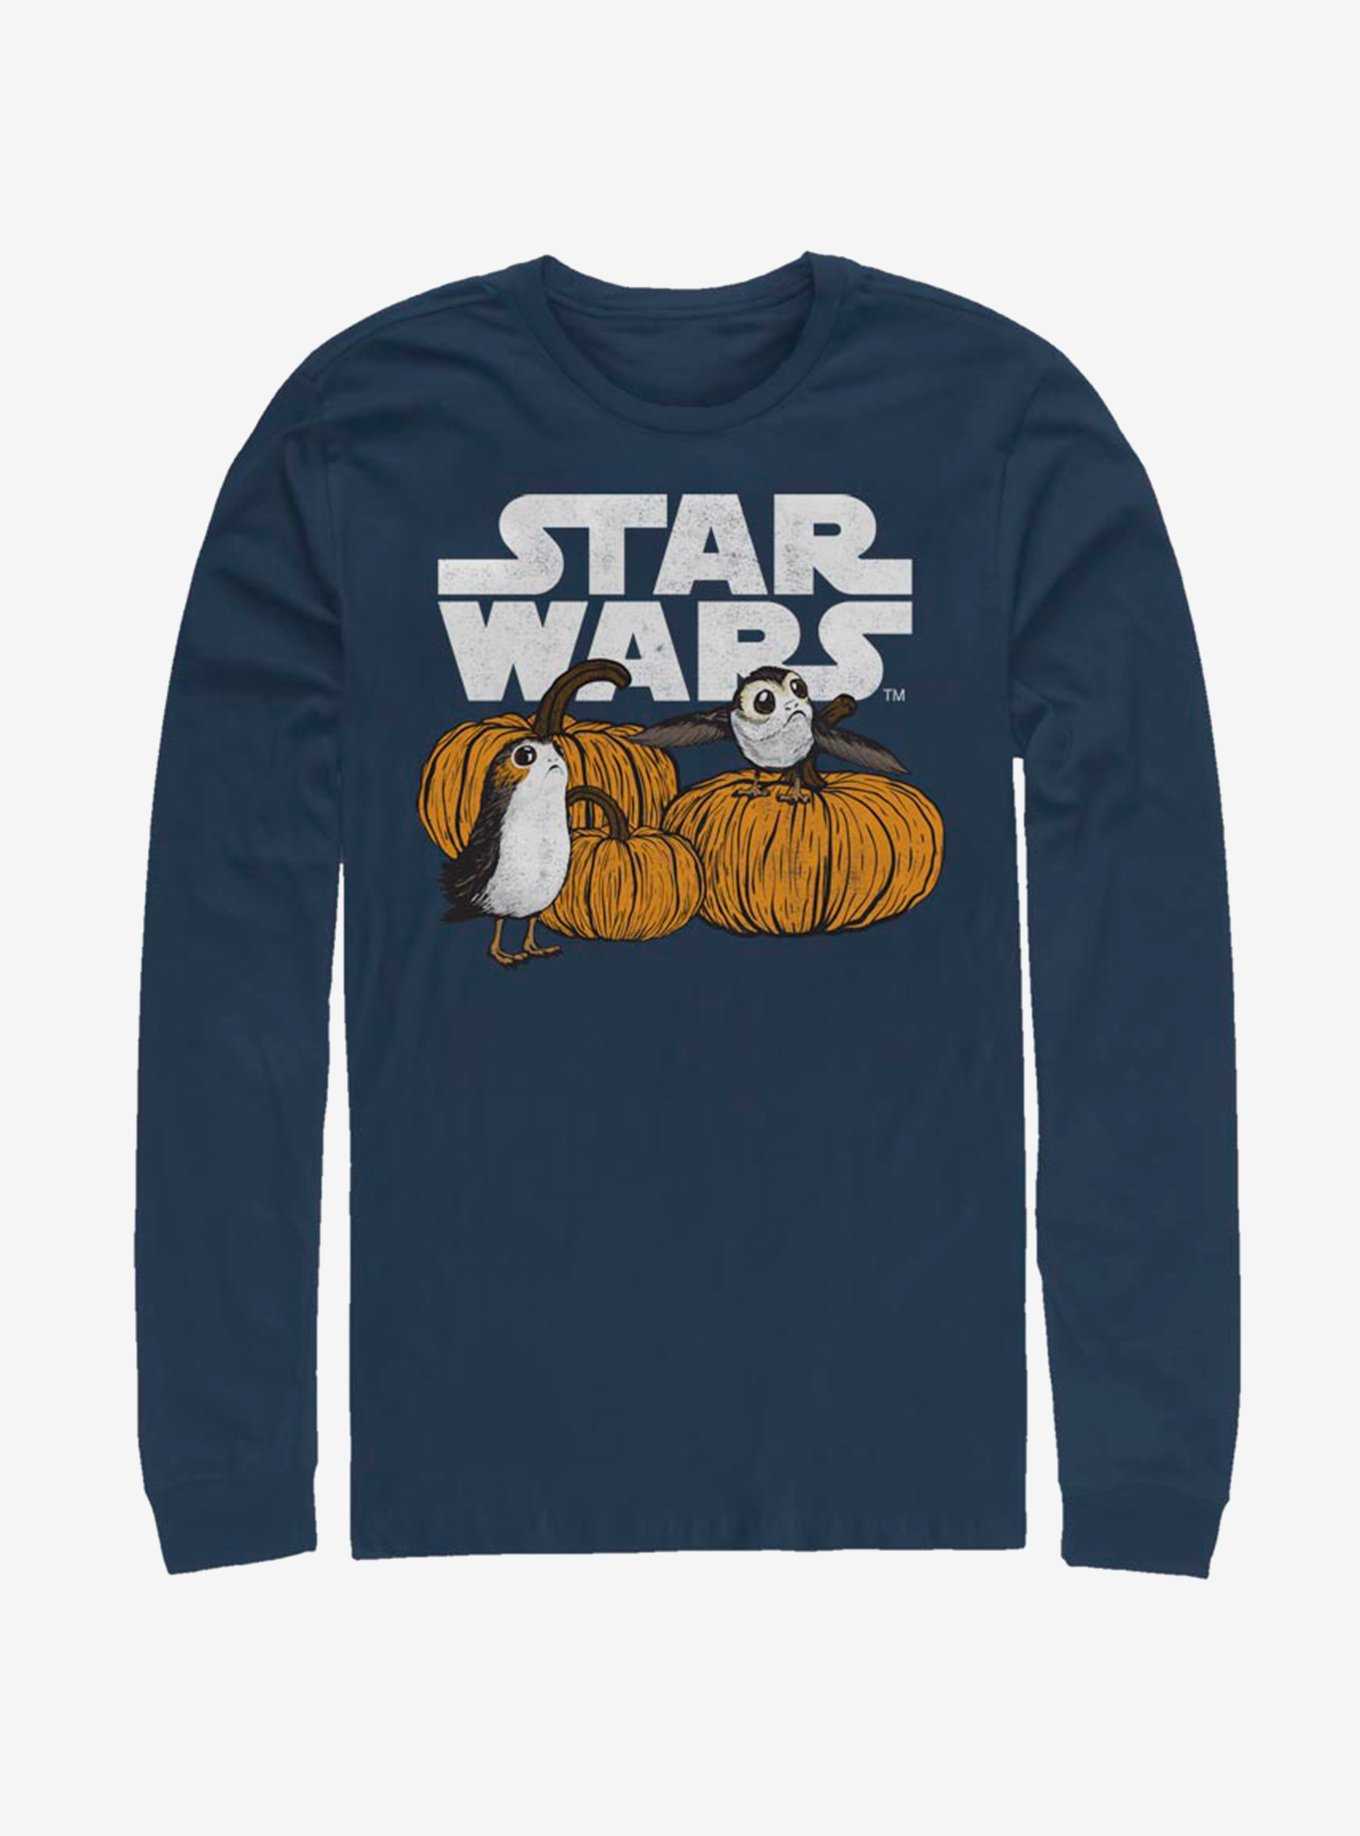 Star Wars Episode VIII The Last Jedi Pumpkin Patch Porg Long-Sleeve T-Shirt, , hi-res